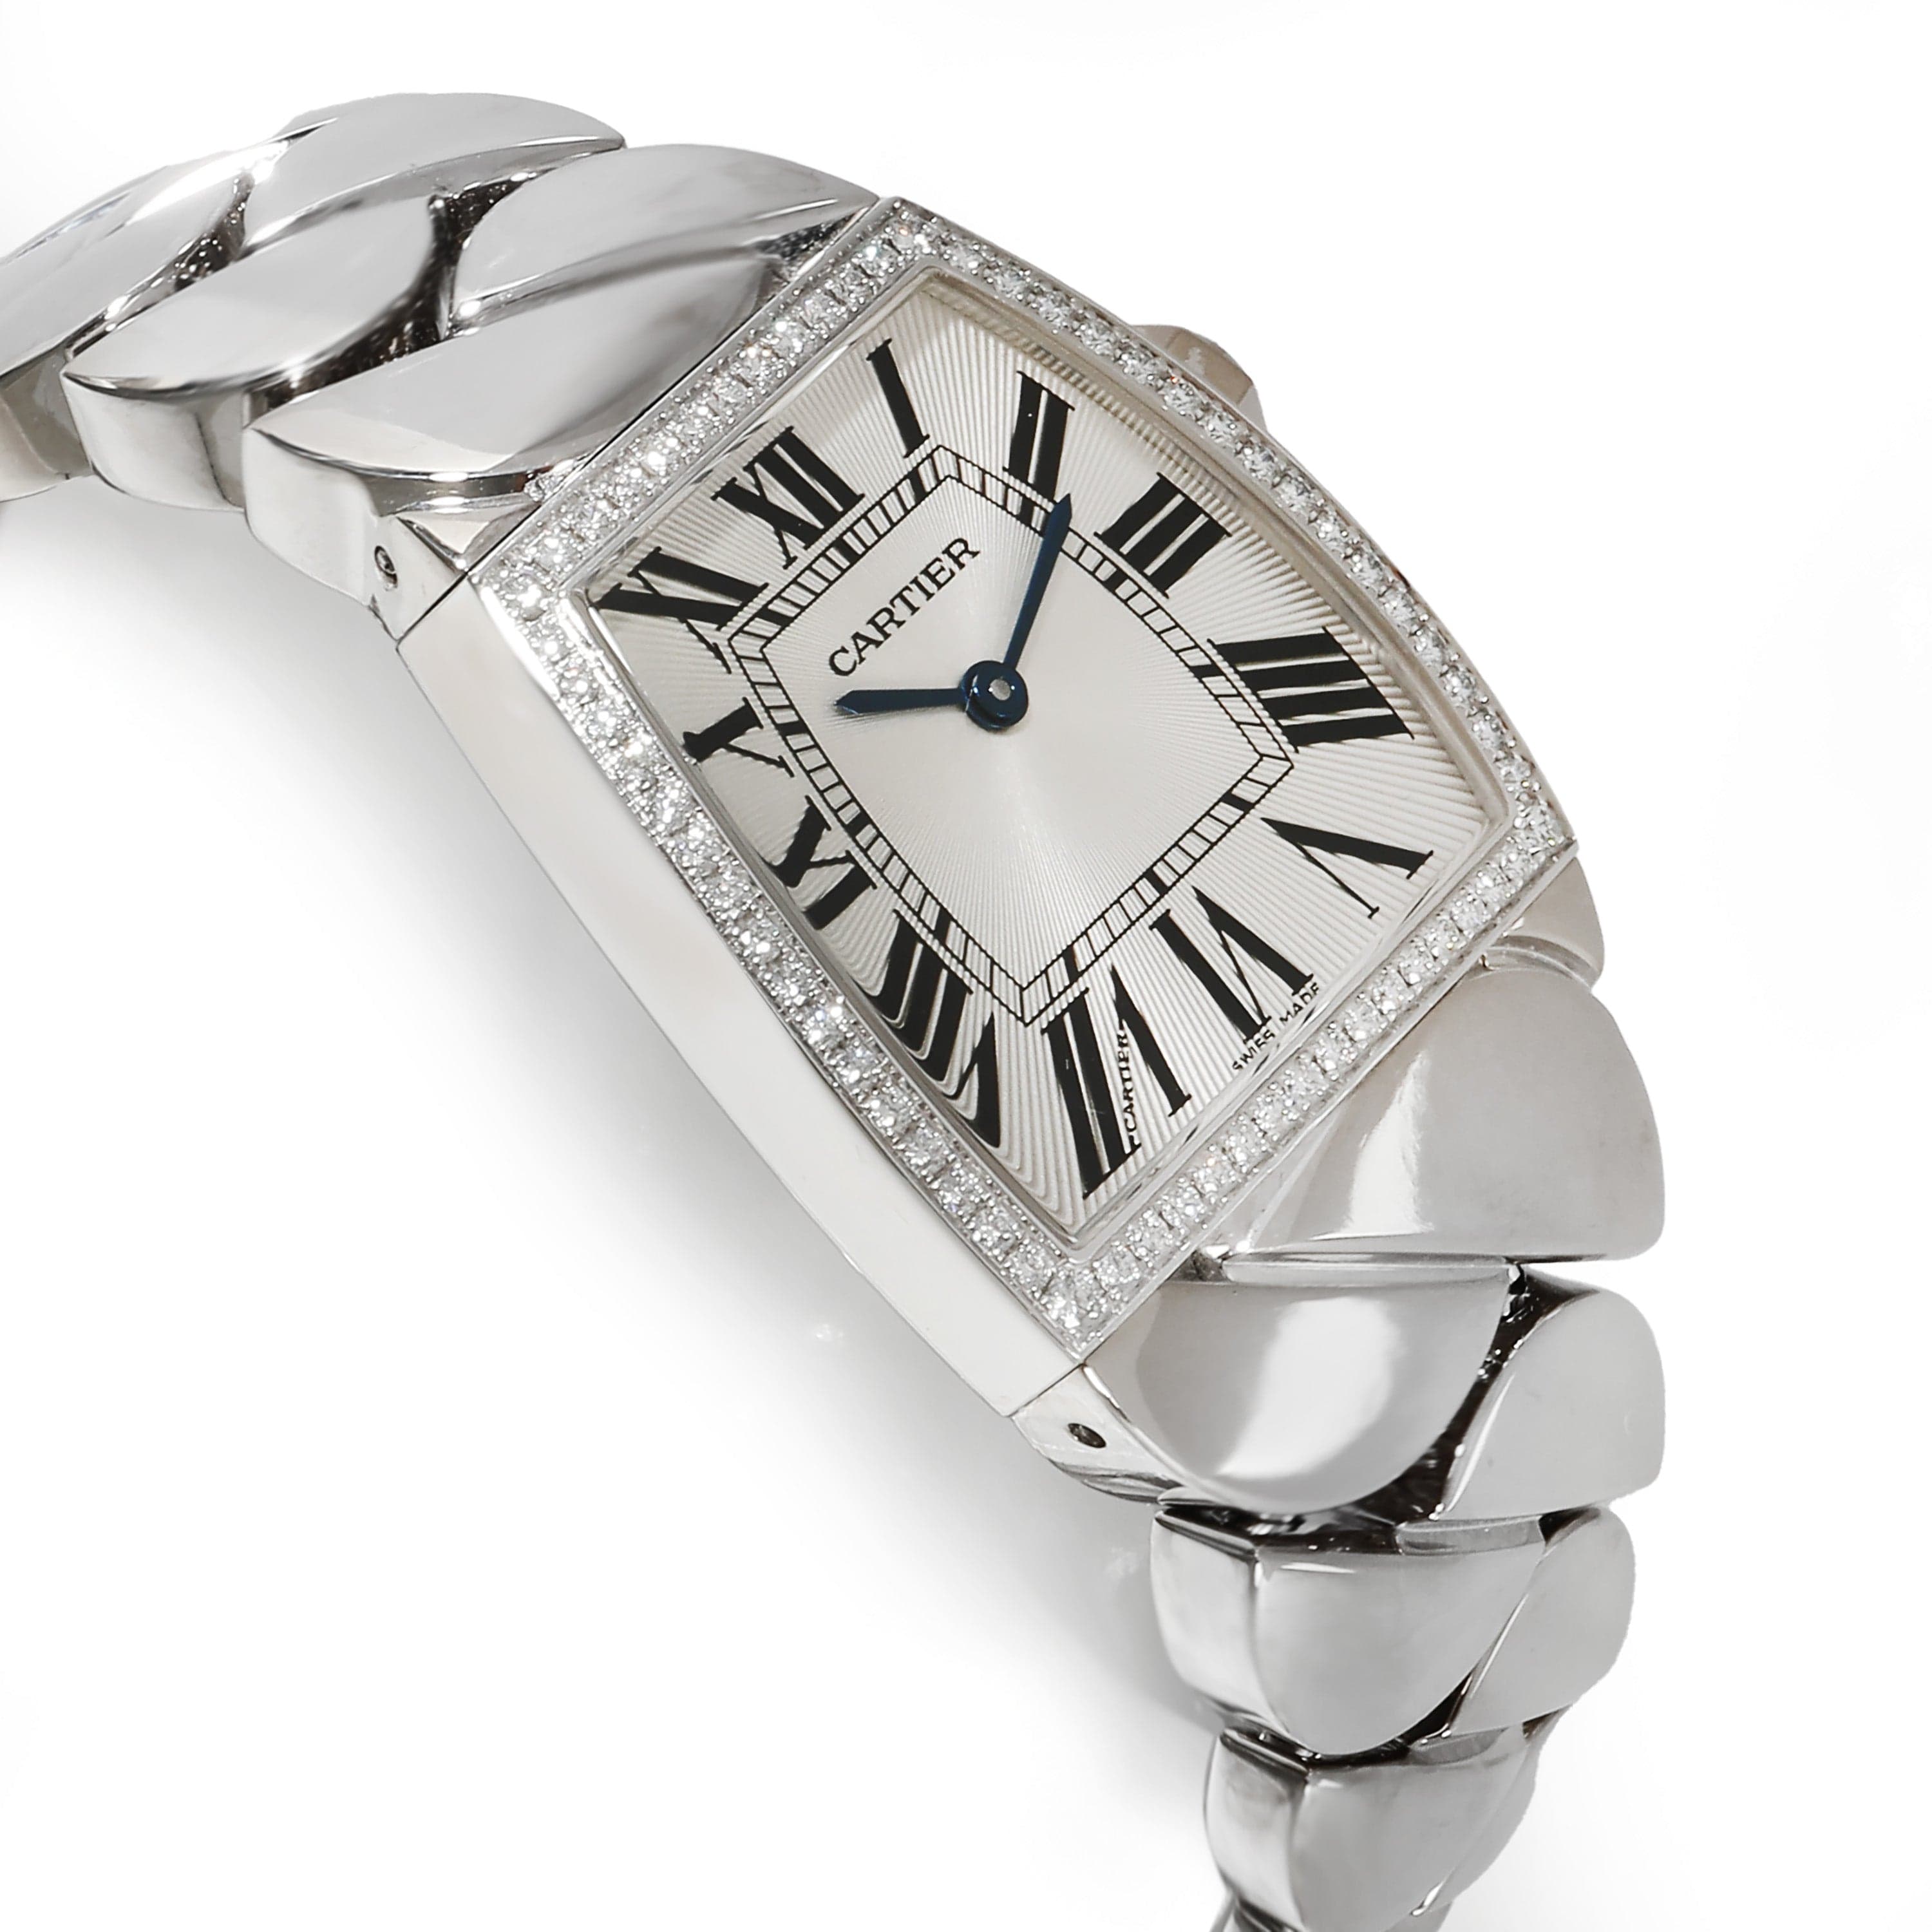 Cartier Cartier La Dona de Cartier 2895 Unisex Watch in 18kt White Gold